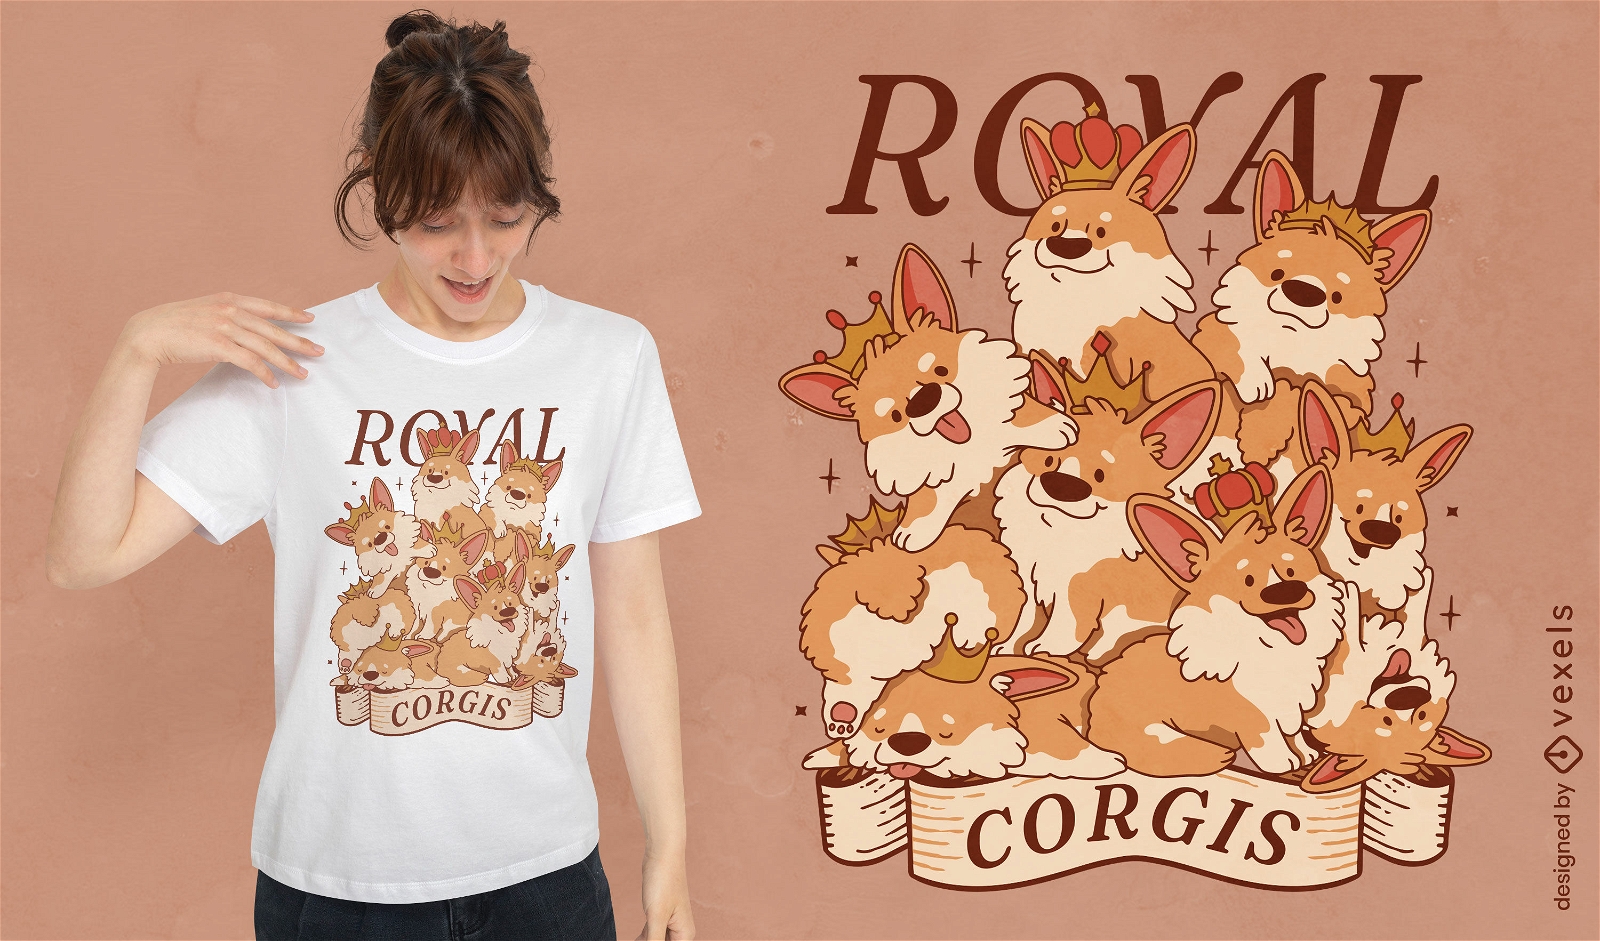 Corgi dogs with crowns t-shirt design